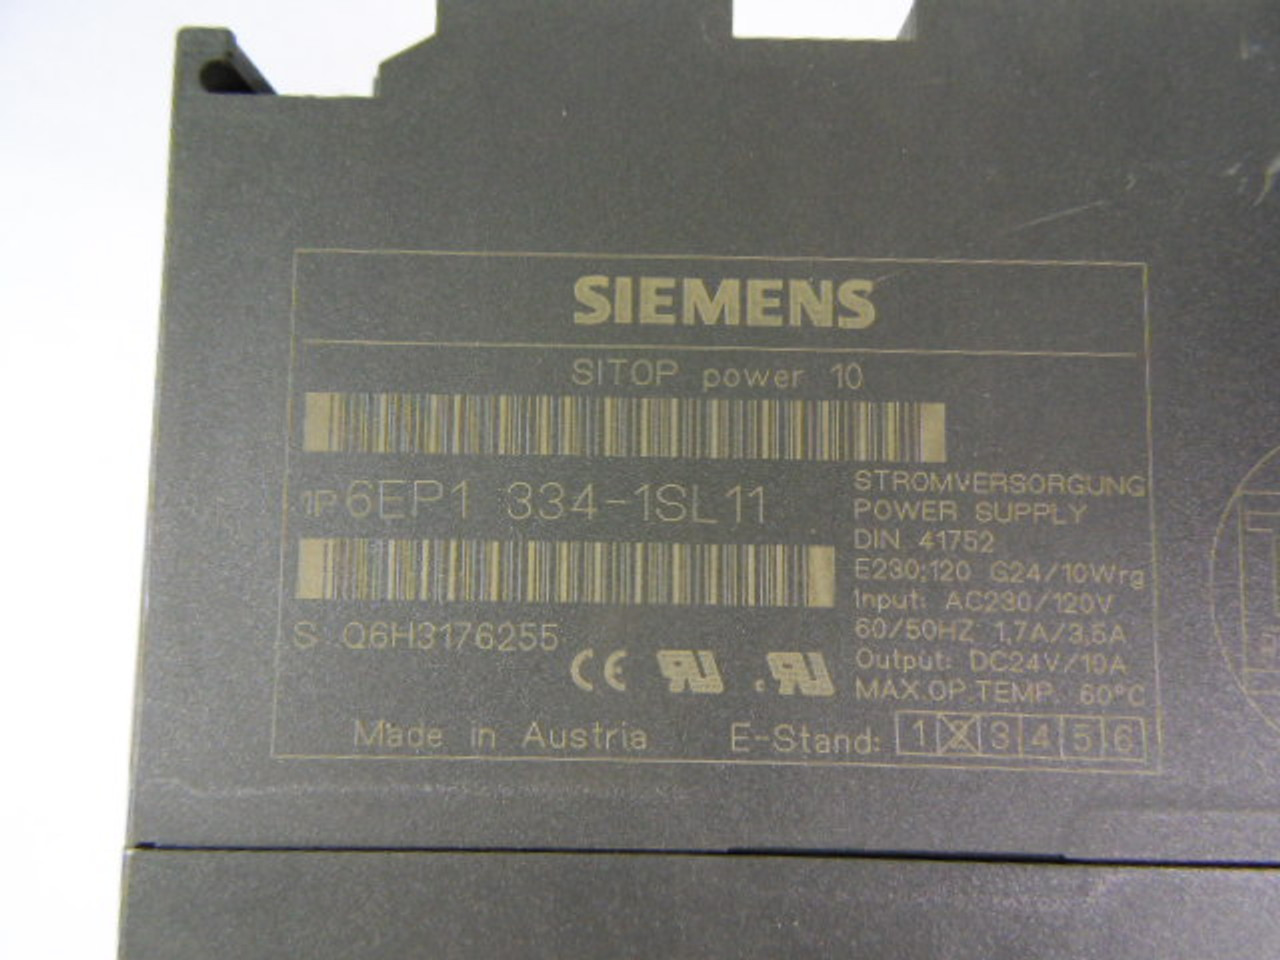 Siemens 6EP1-334-1SL11 Power Supply 10 Amp 120 Vac input 24 VDC Output USED